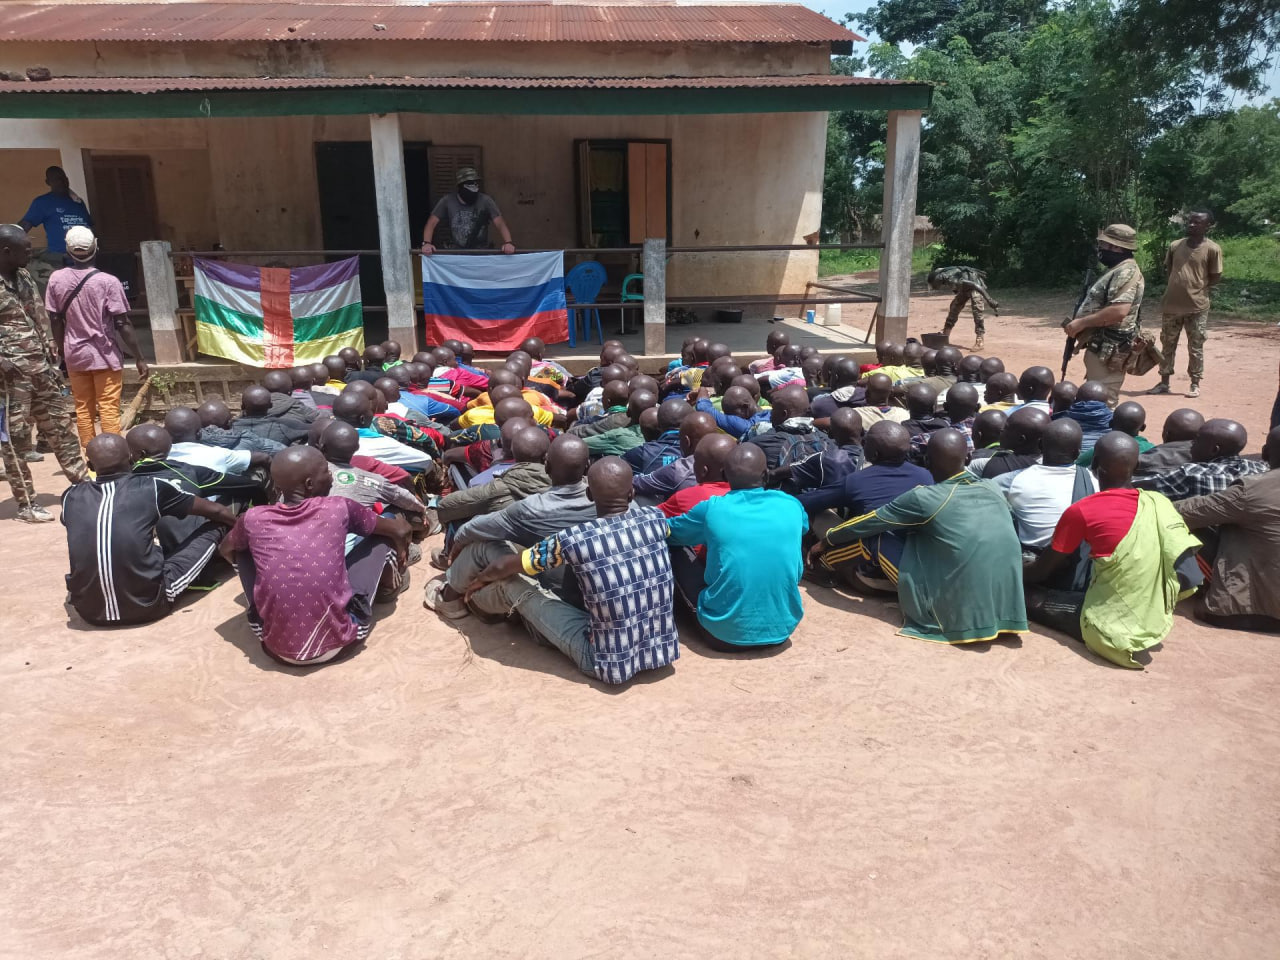 Antibalaka voluntary disarmament continues in Kuango